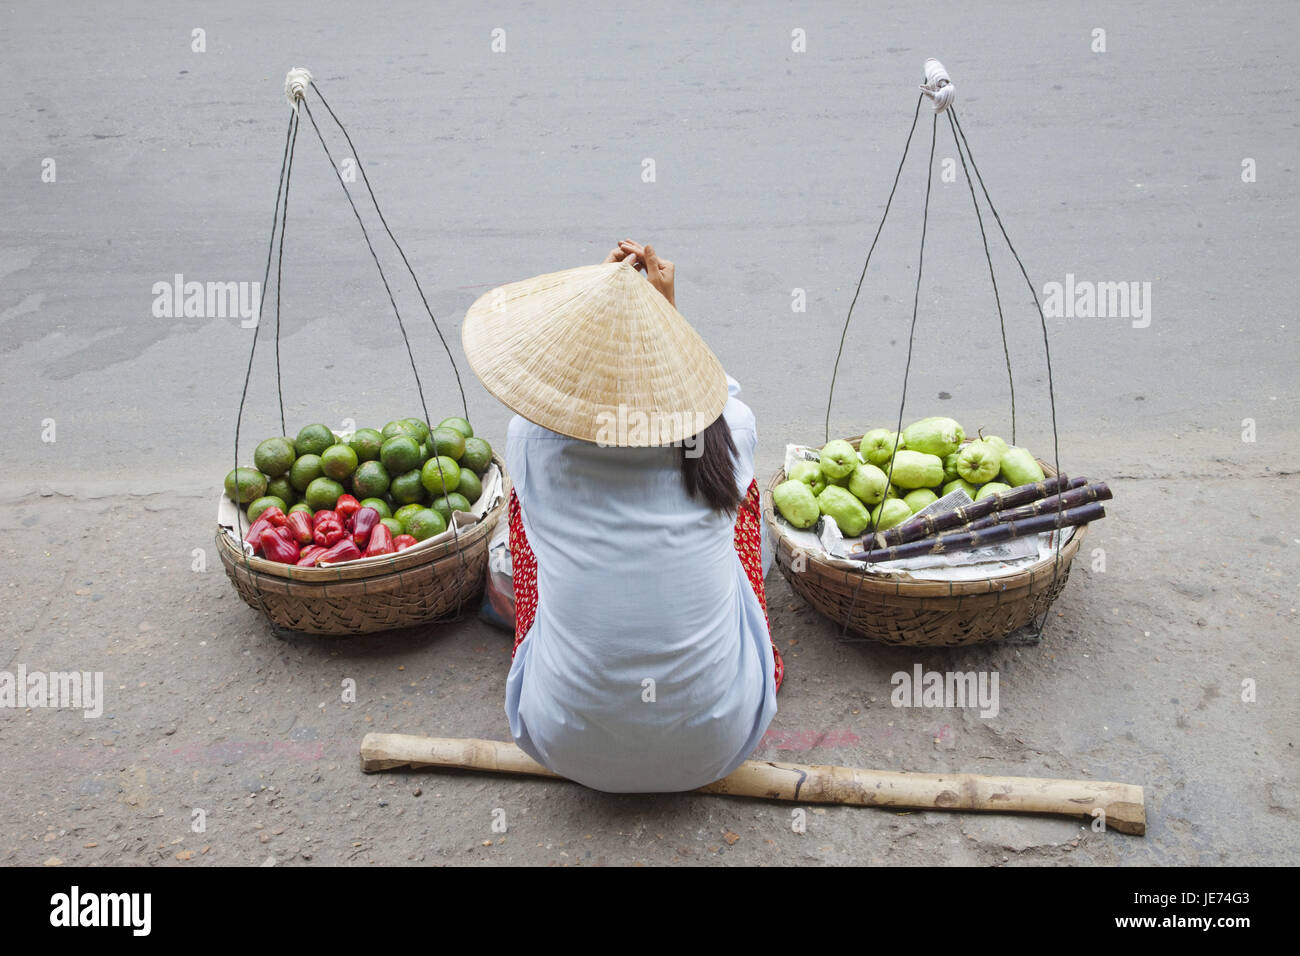 Vietnam, Hoi an In, Old Town, Straßenhändler, Obst-Vertrieb, Stockfoto